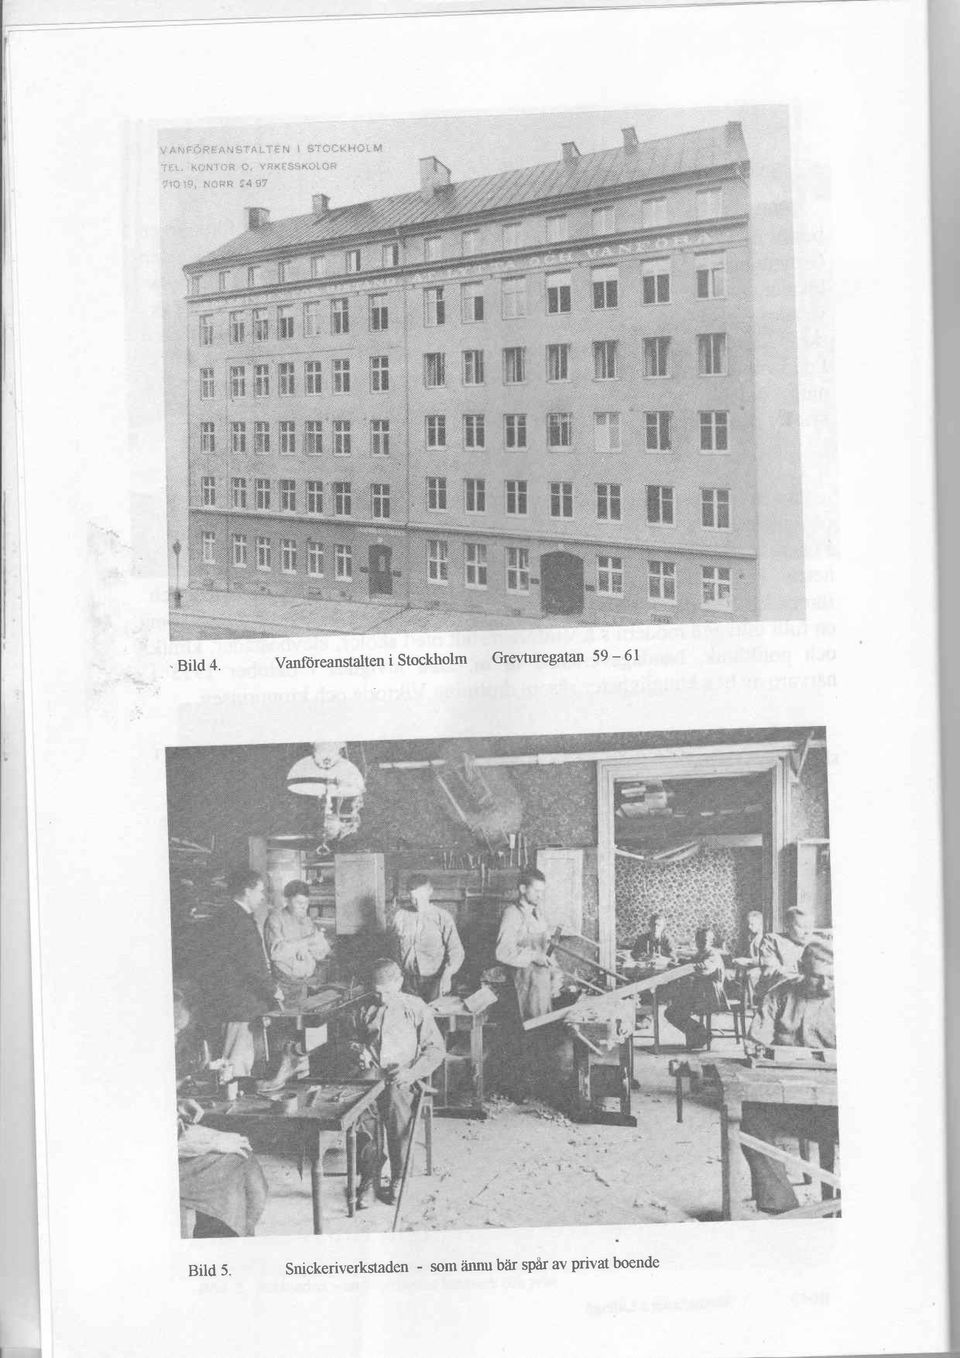 Vanforeanstalten i Stockholm Grevhregatan 59-6l Bild 5.